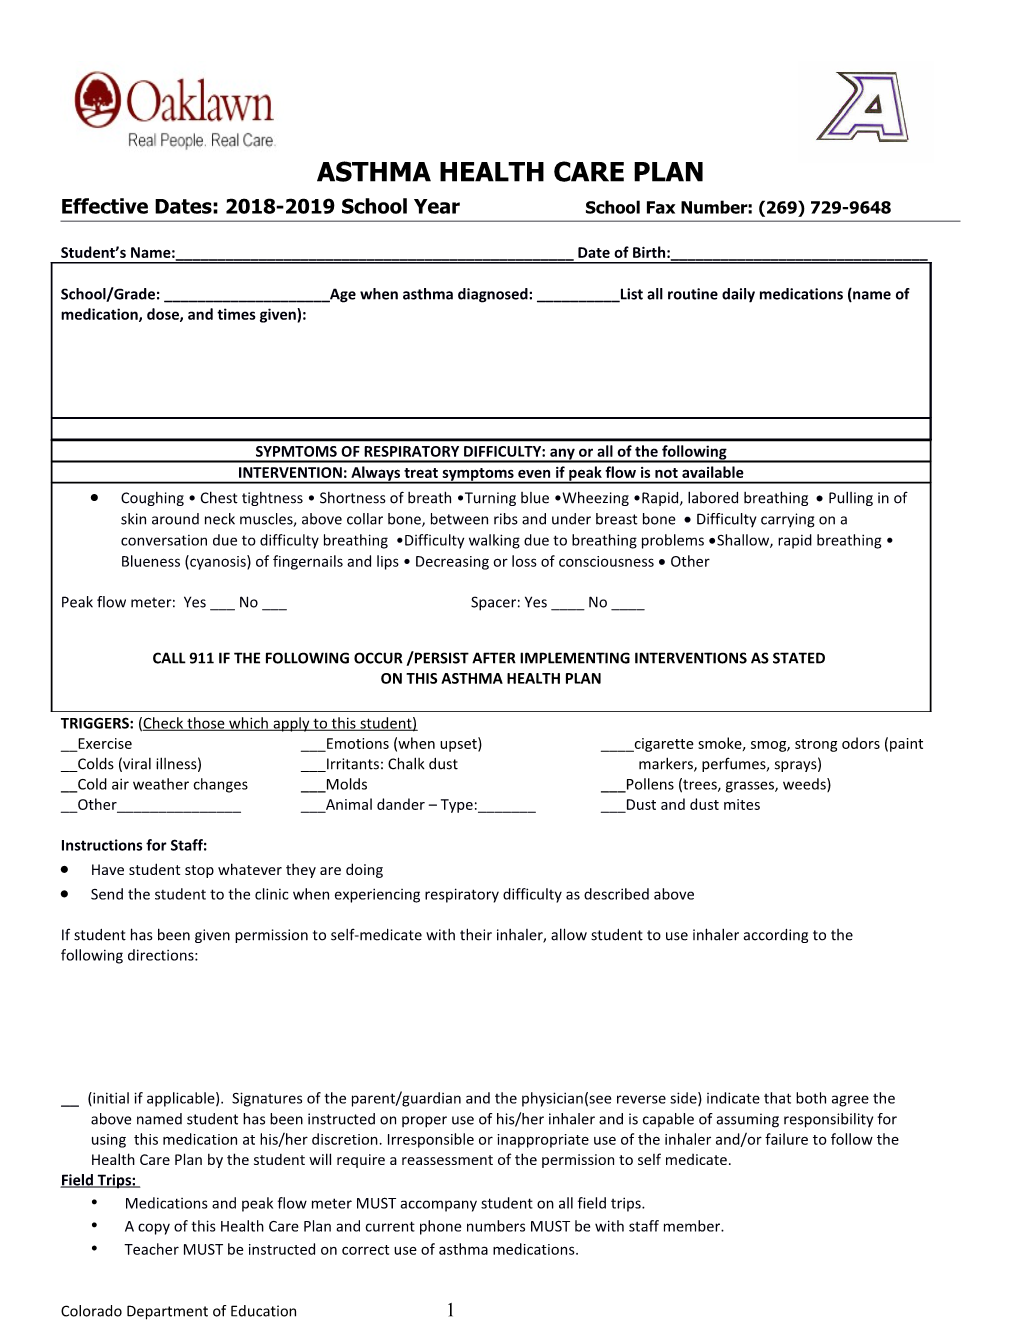 Asthma Health Care Plan